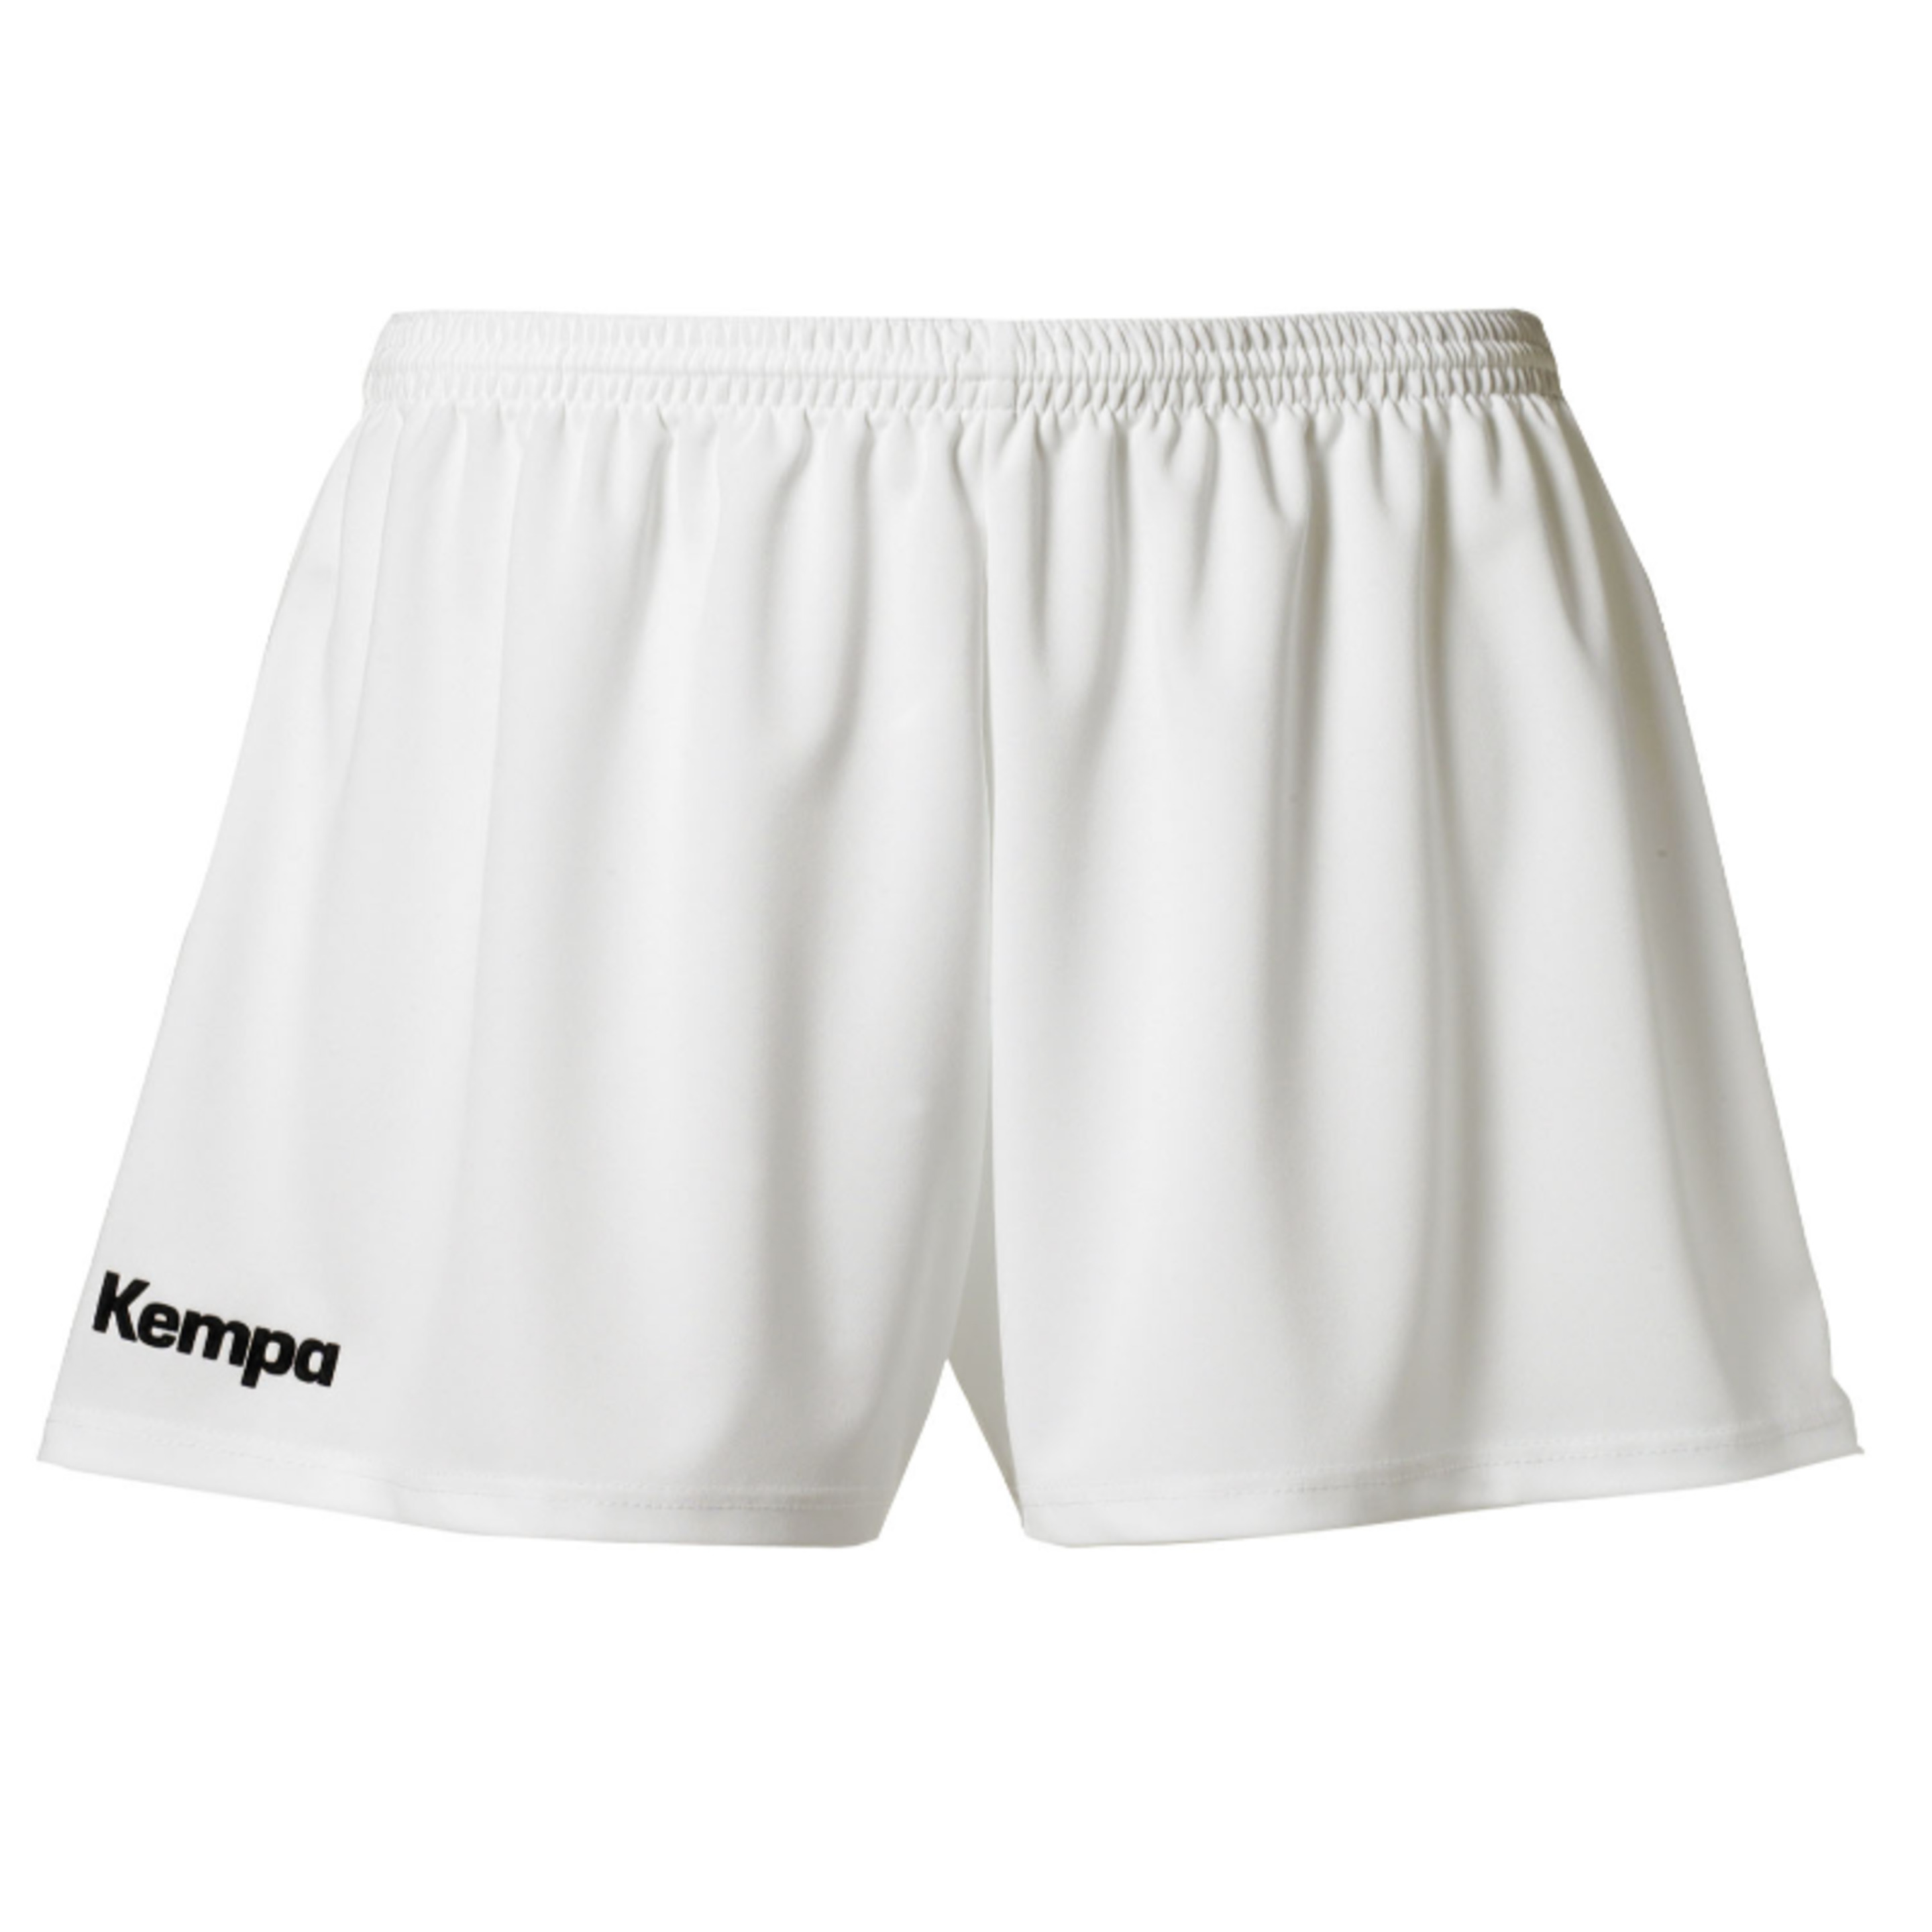 Classic Shorts De Mujer Blanco Kempa - blanco - 